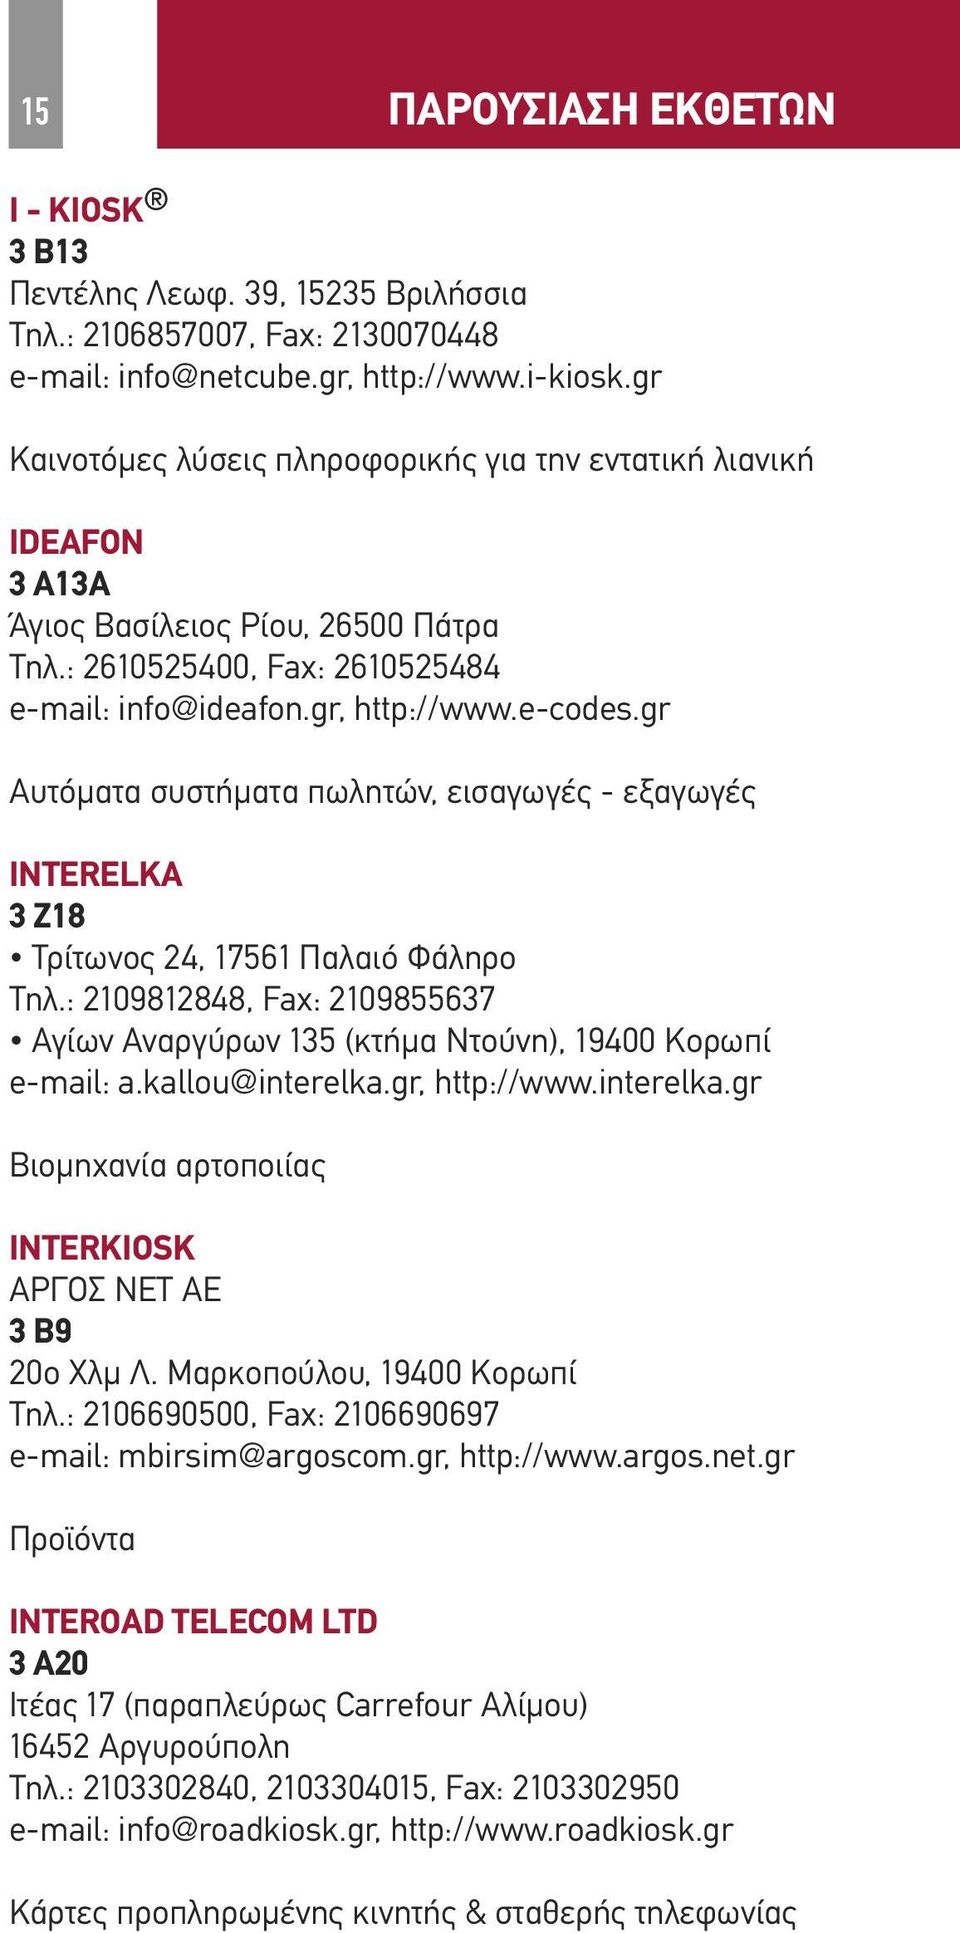 gr Αυτόματα συστήματα πωλητών, εισαγωγές - εξαγωγές INTERELKA 3 Ζ18 Τρίτωνος 24, 17561 Παλαιό Φάληρο Τηλ.: 2109812848, Fax: 2109855637 Αγίων Αναργύρων 135 (κτήμα Ντούνη), 19400 Κορωπί e-mail: a.